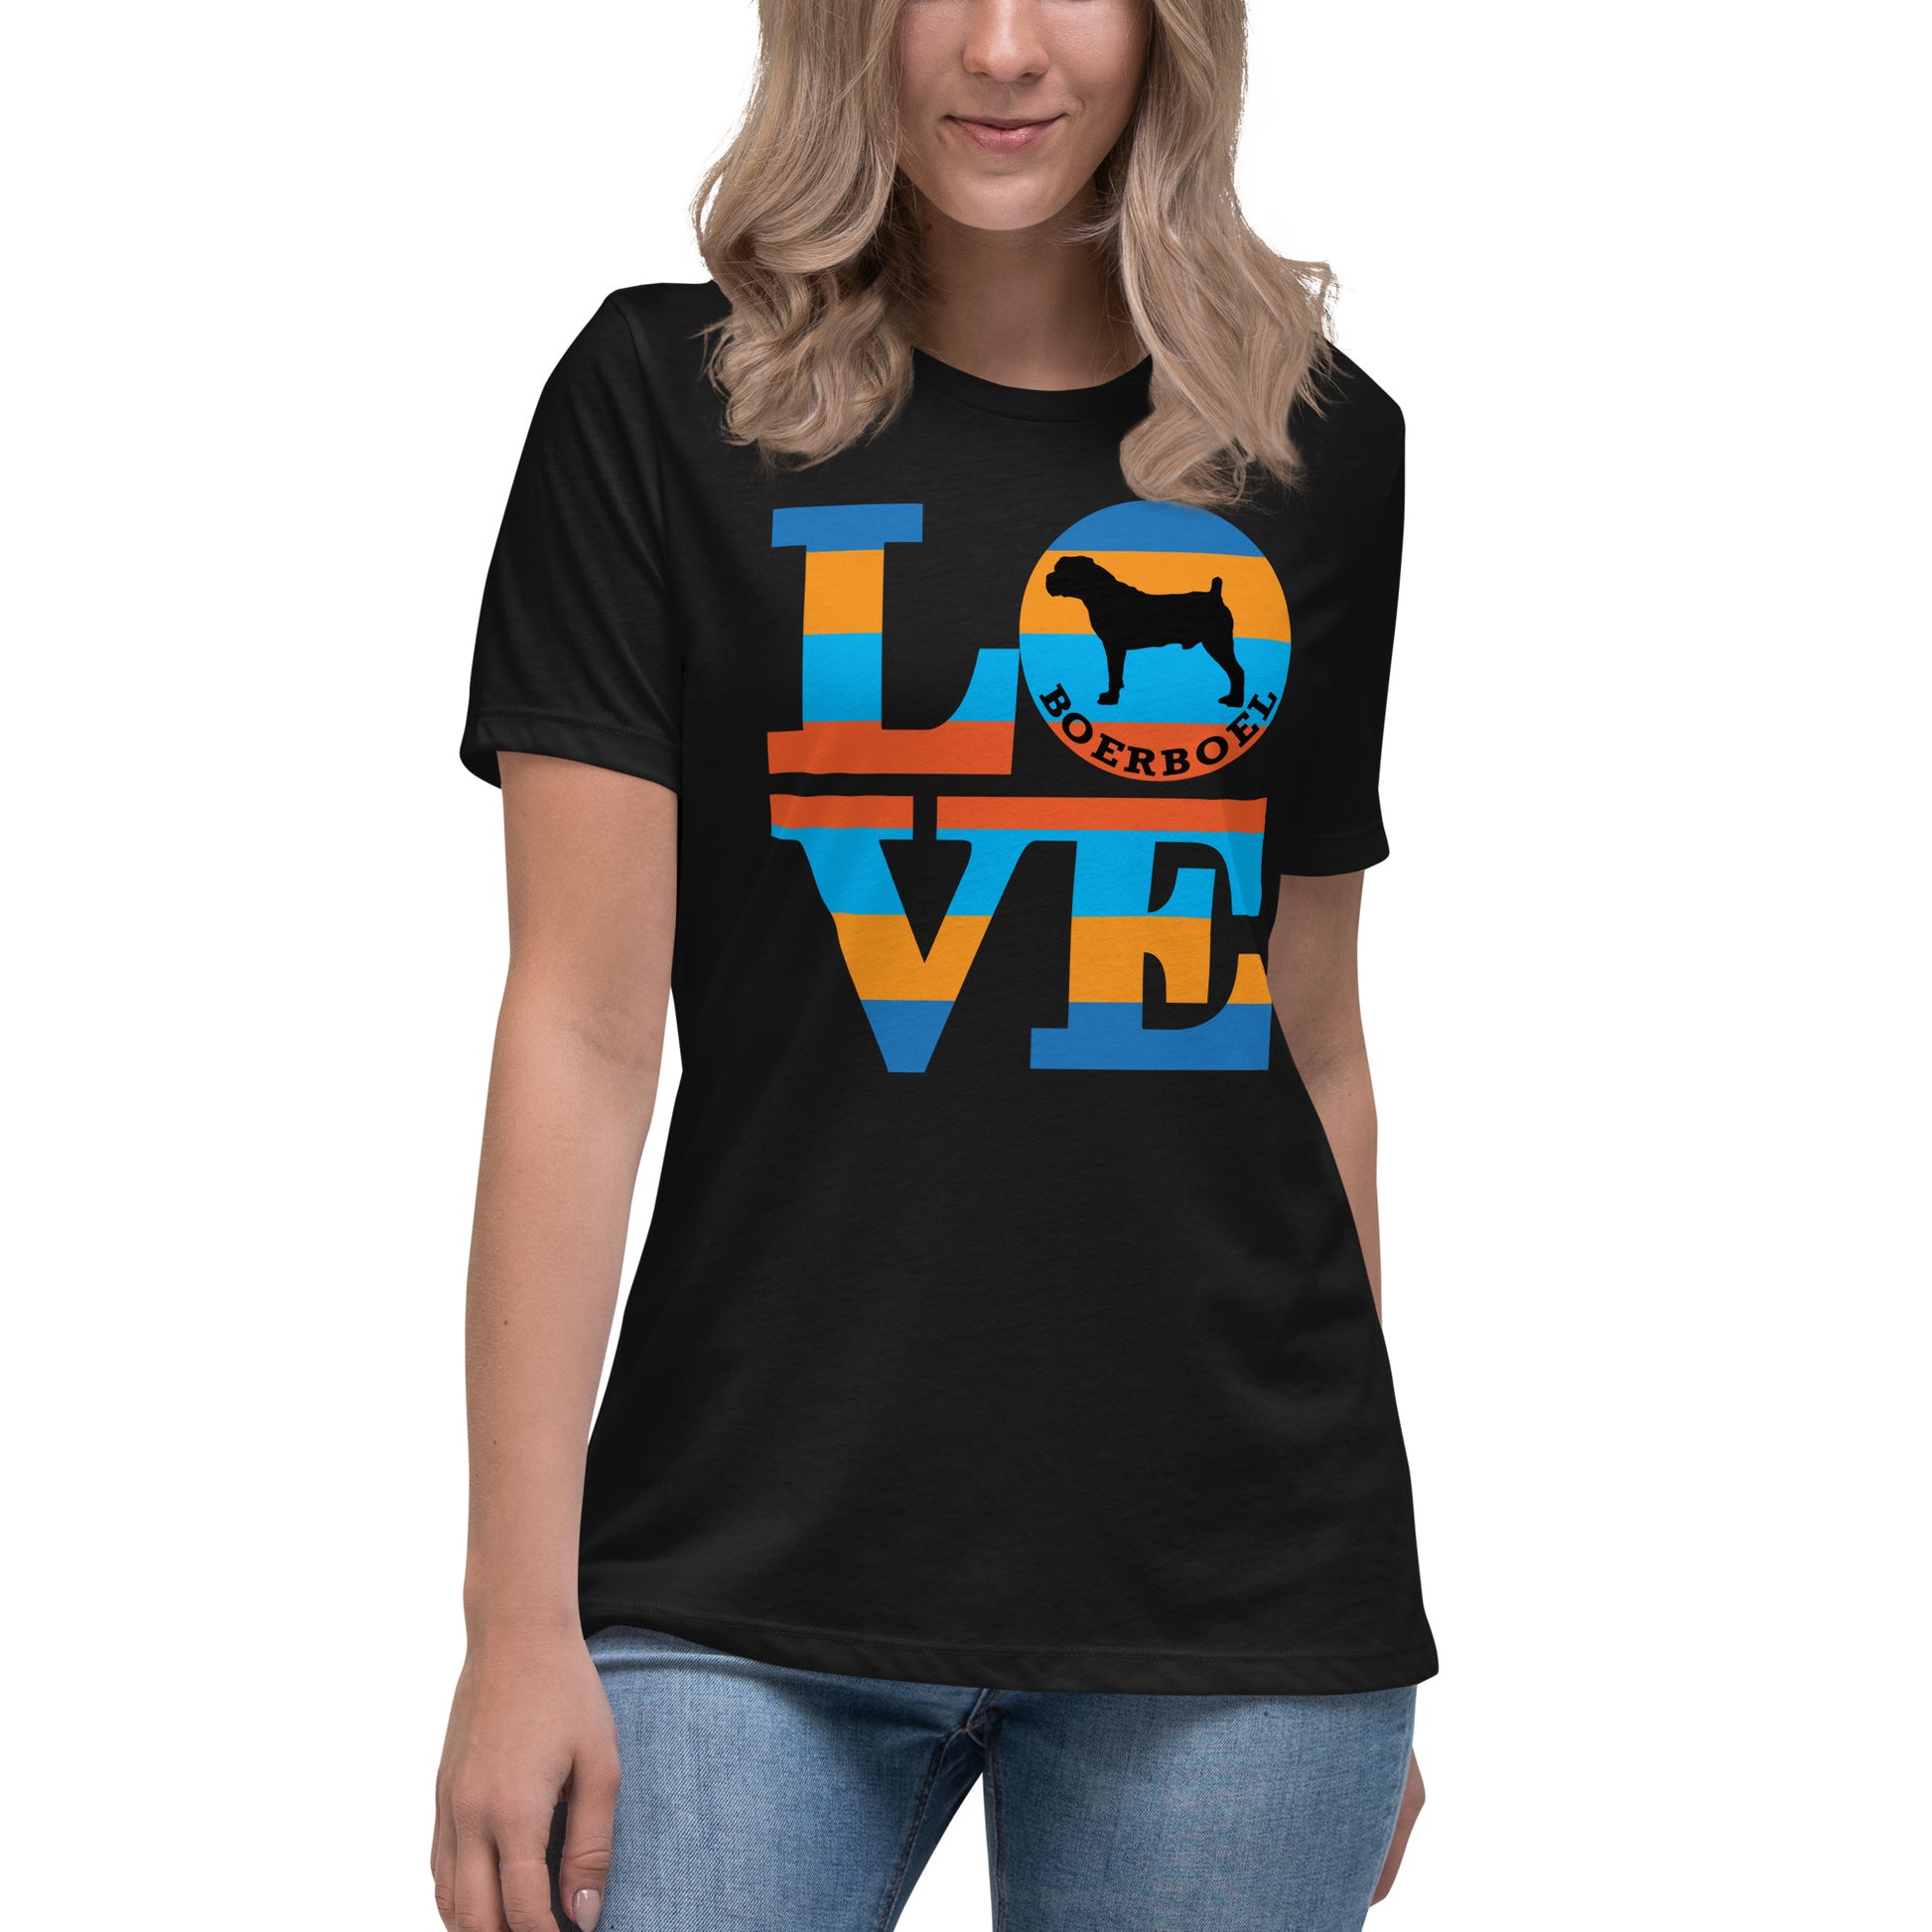 Boerboel Love women’s black t-shirt by Dog Artistry.